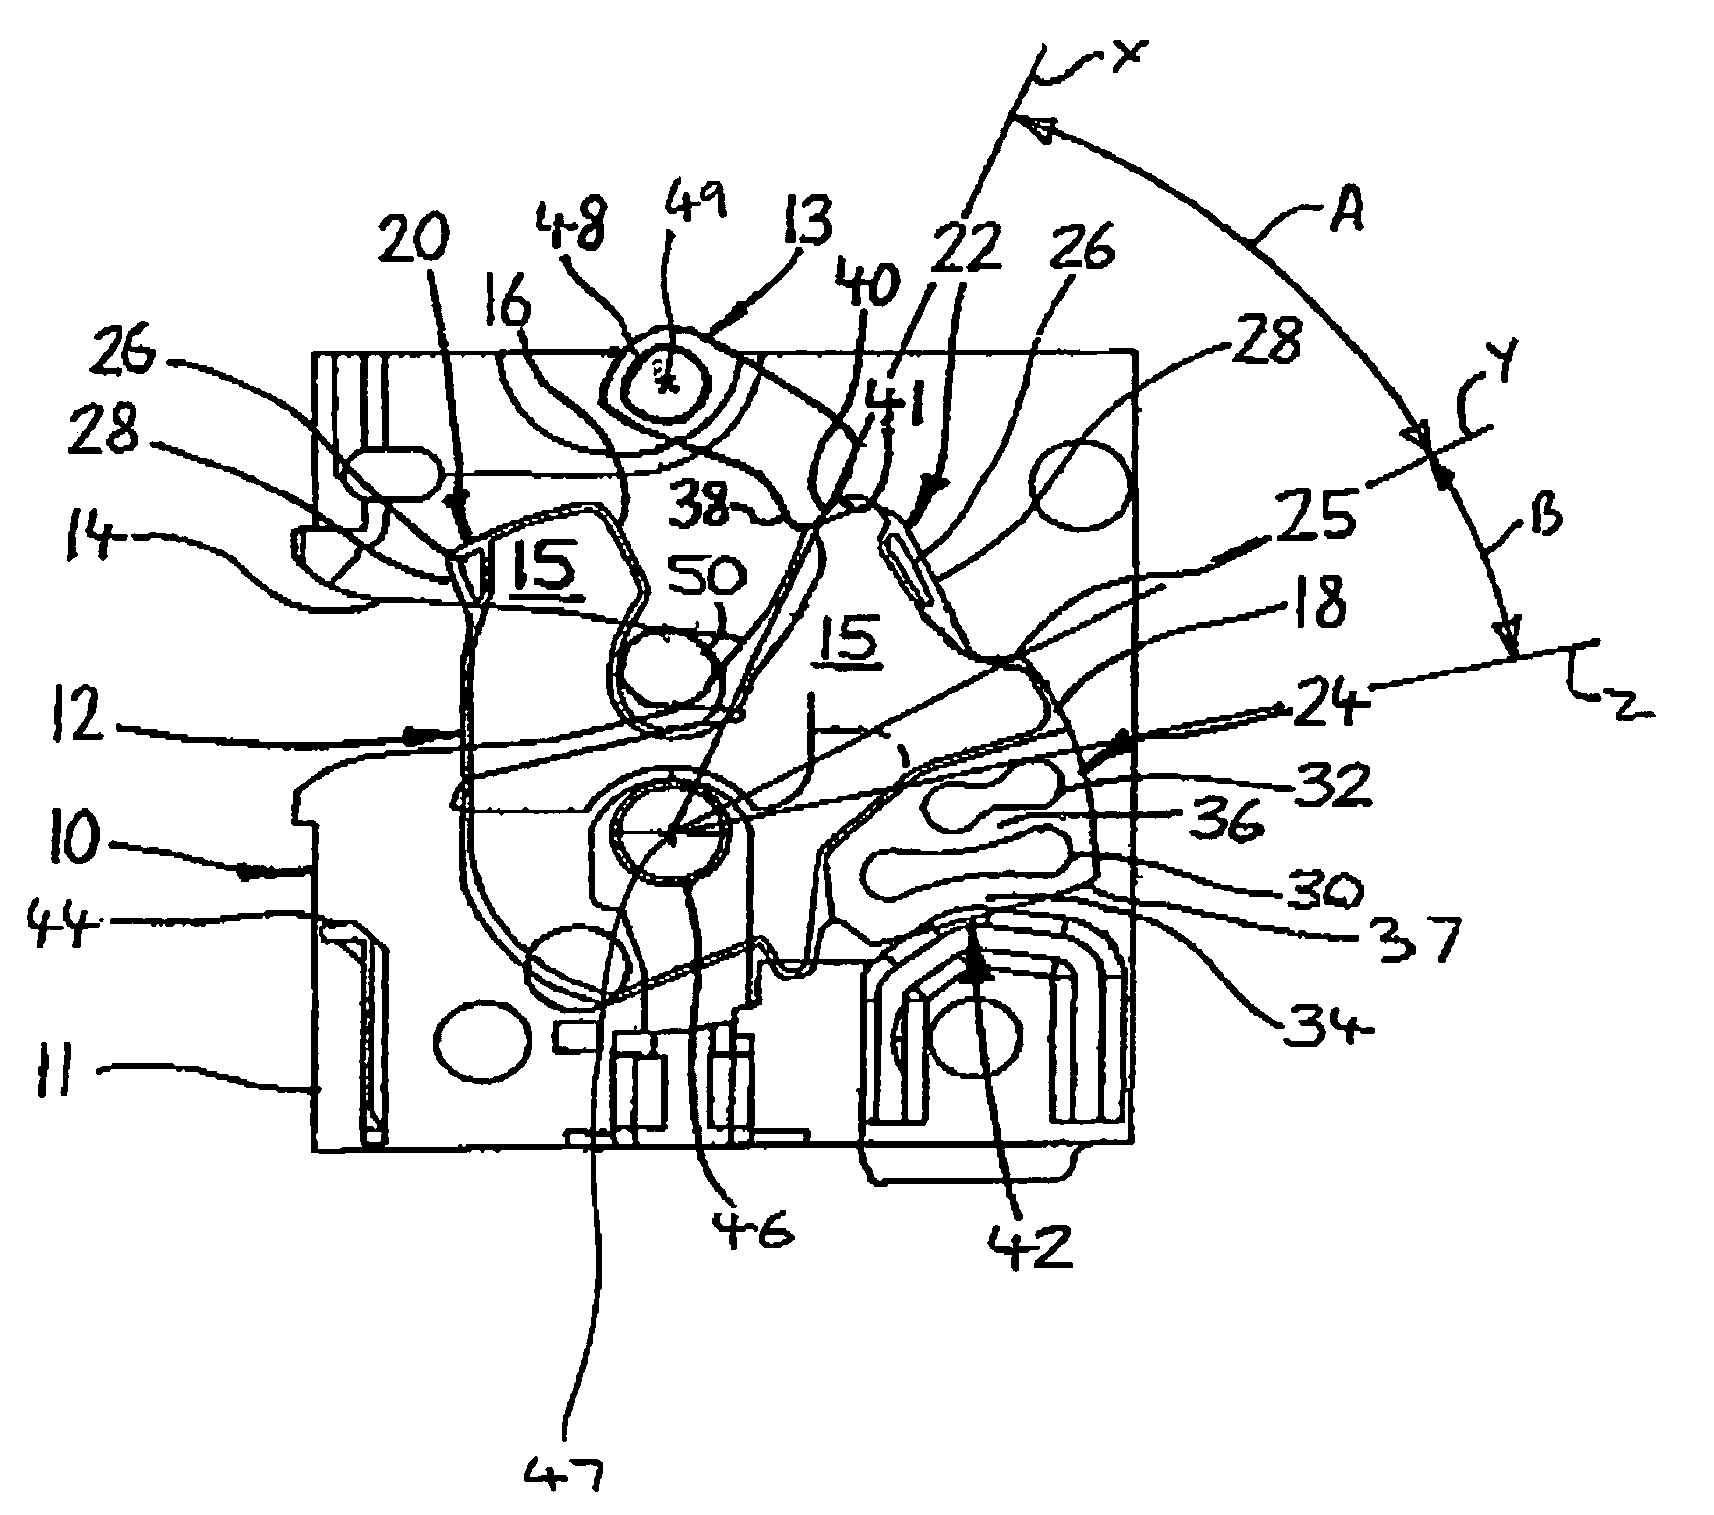 Latch mechanism